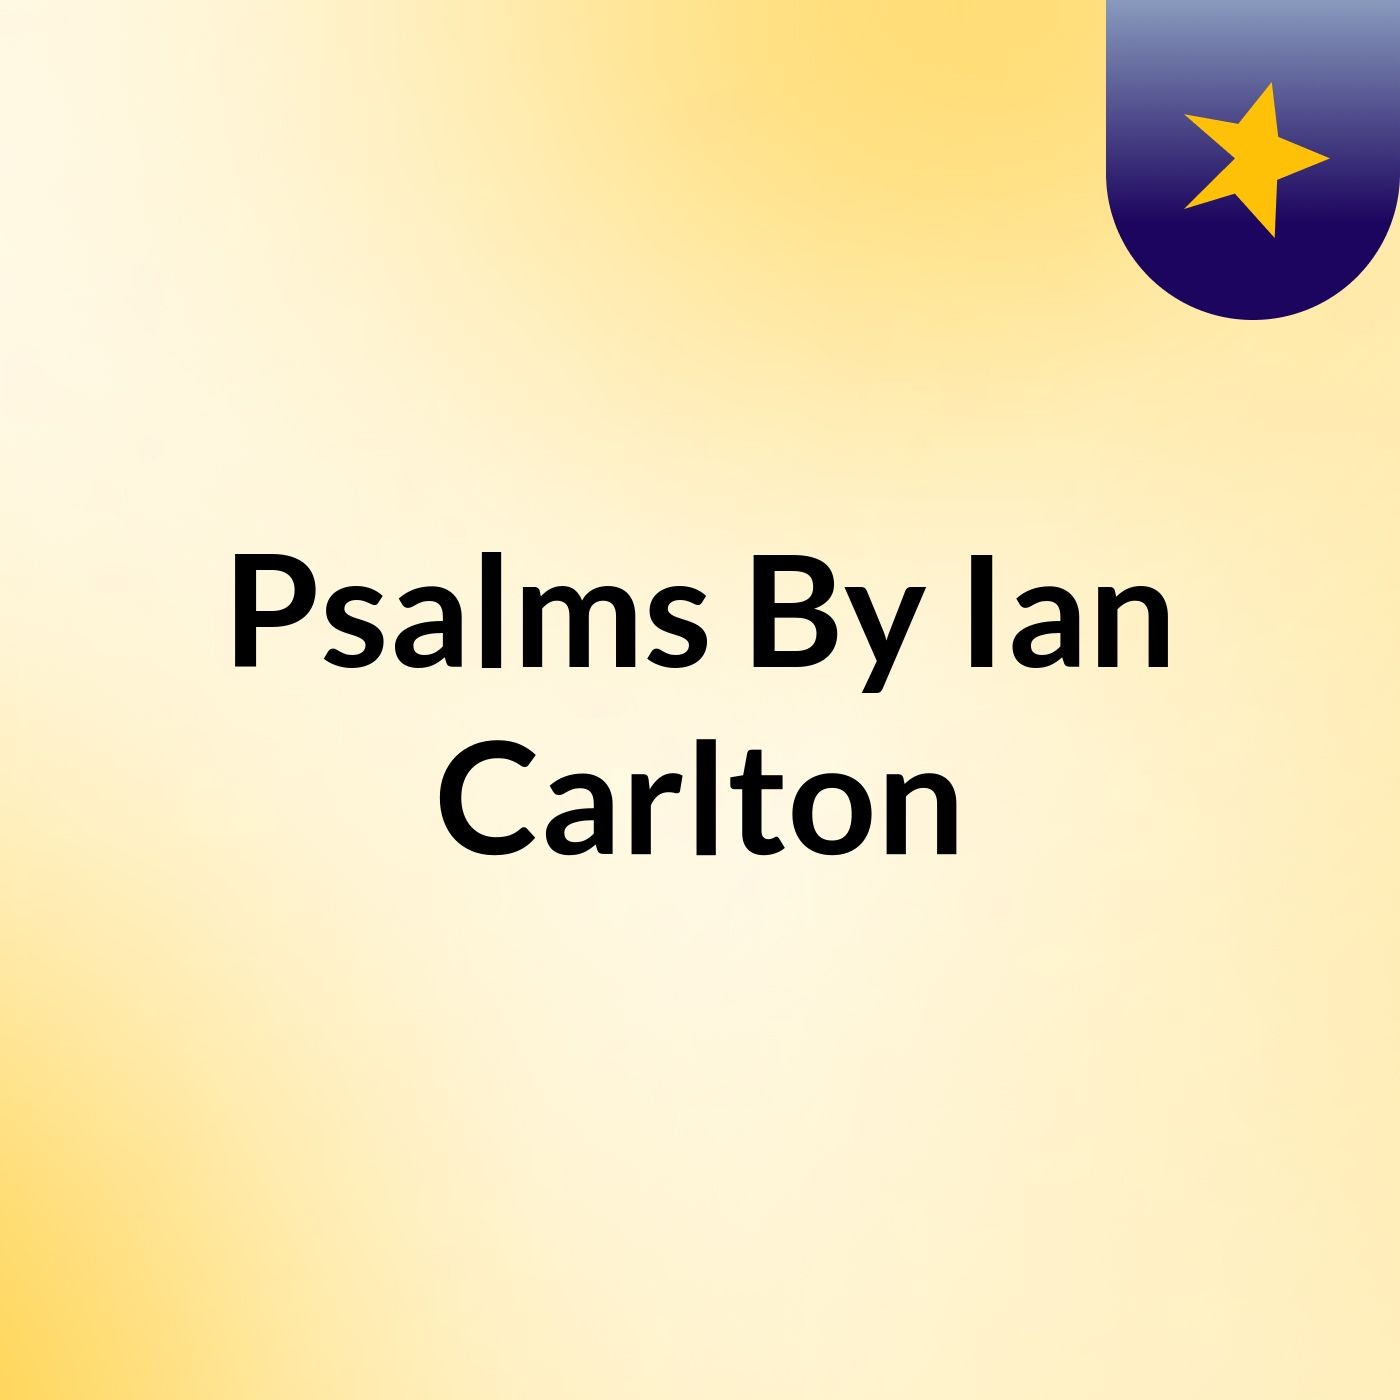 Psalms By: Ian & Carlton